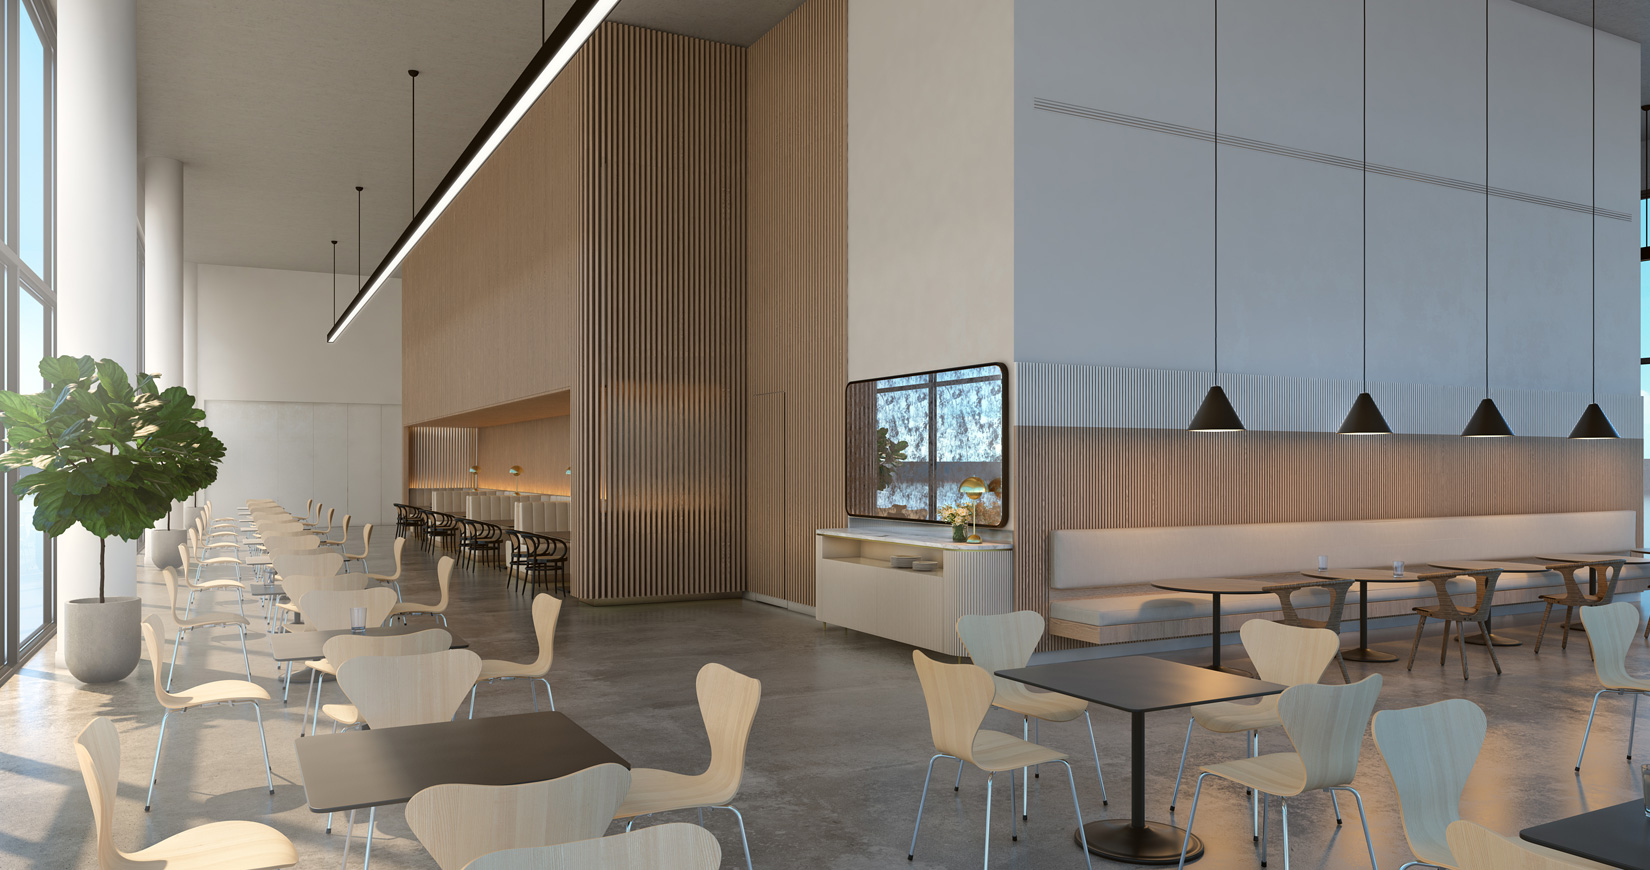 Styled Habitat designs interiors for Jotun regional headquarters